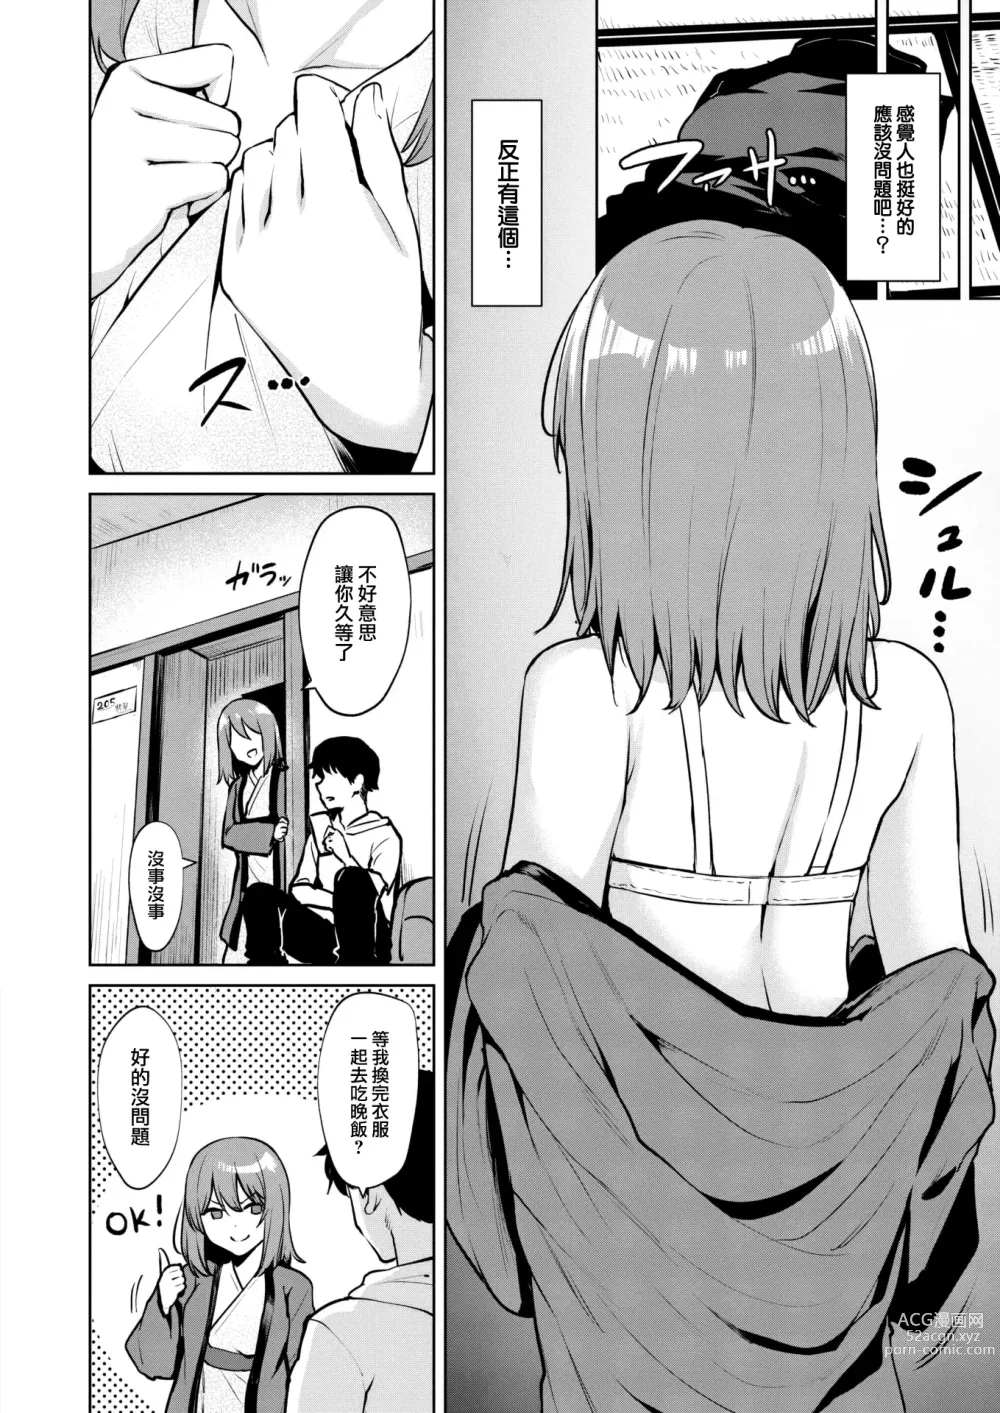 Page 5 of manga Shinnmitsu